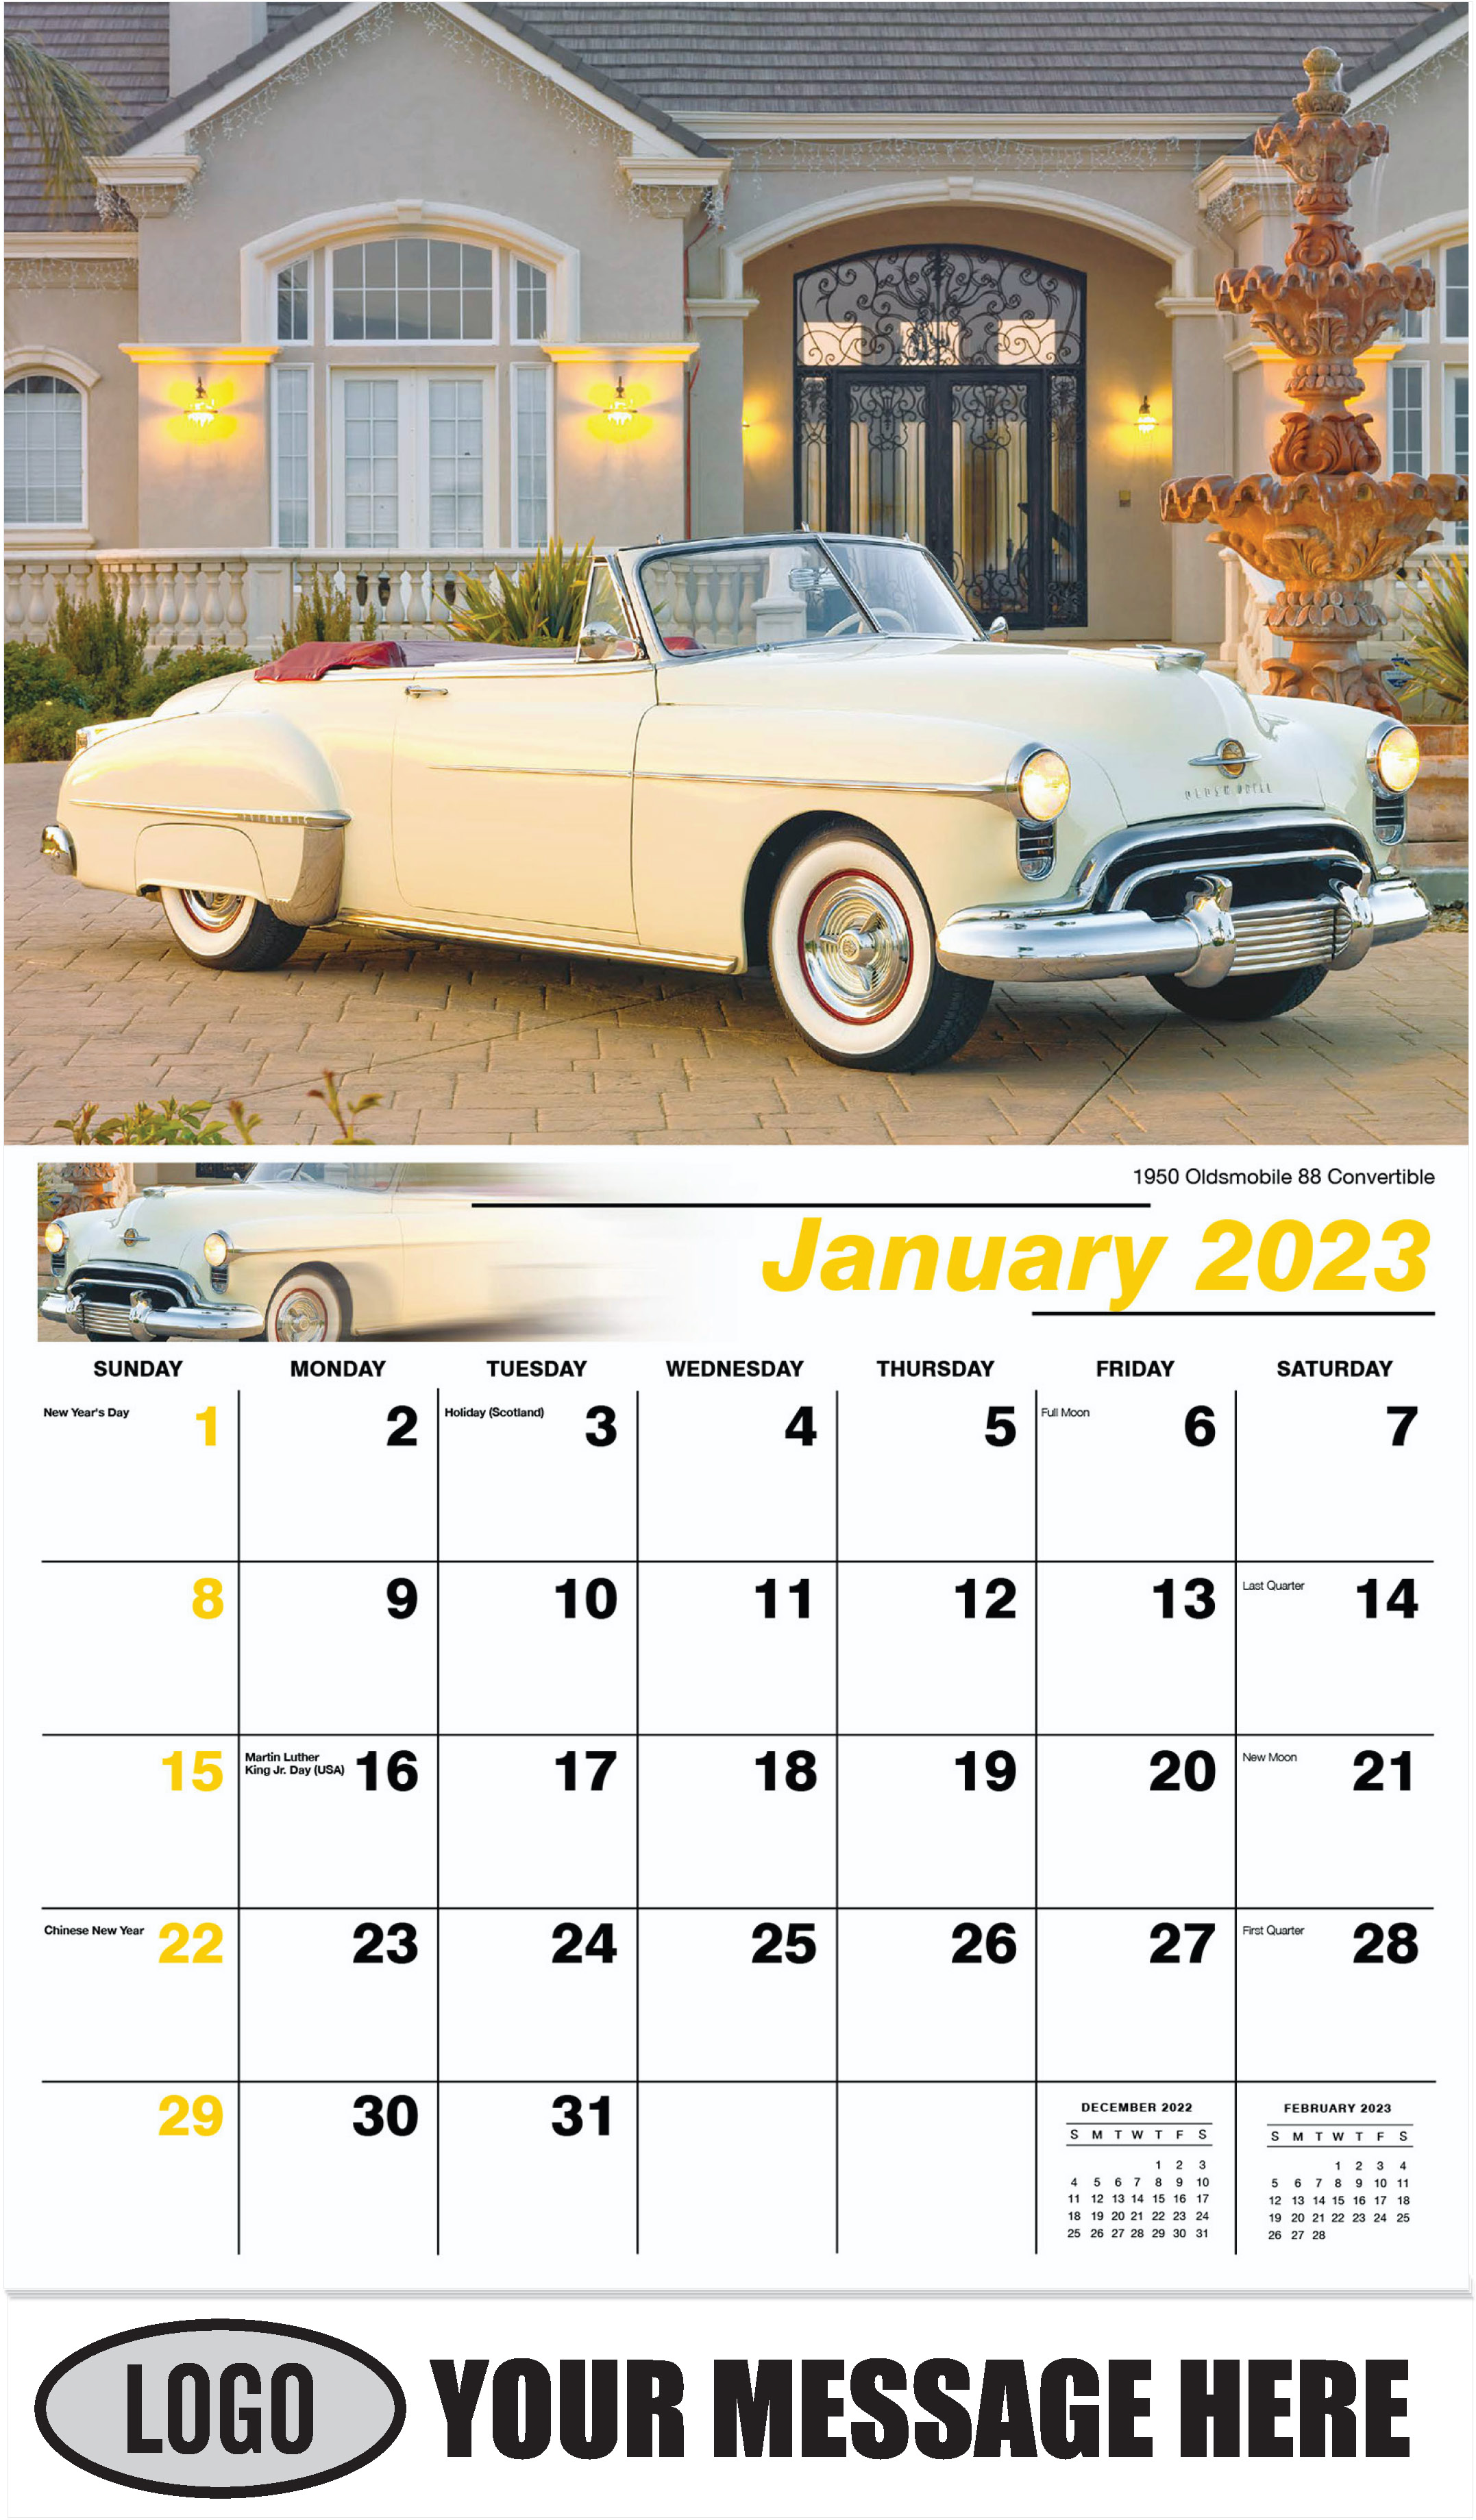 1950 Oldsmobile 88 Convertible - January - Classic Cars 2023 Promotional Calendar